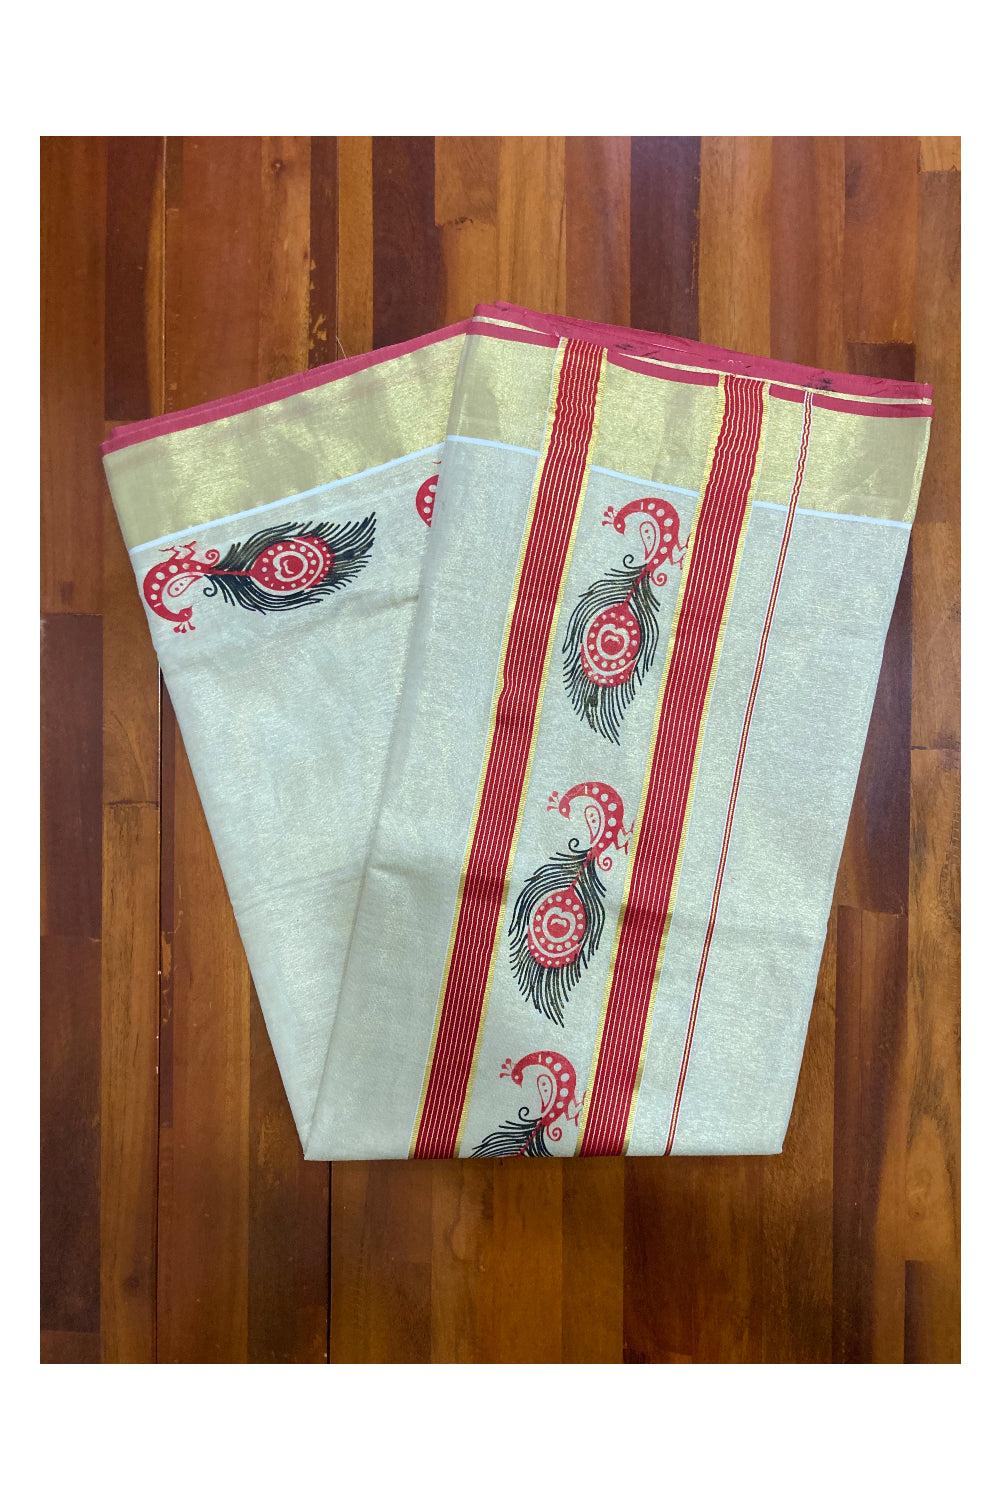 Kerala Tissue Kasavu Saree with Red and Black Peacock Block Printed Design